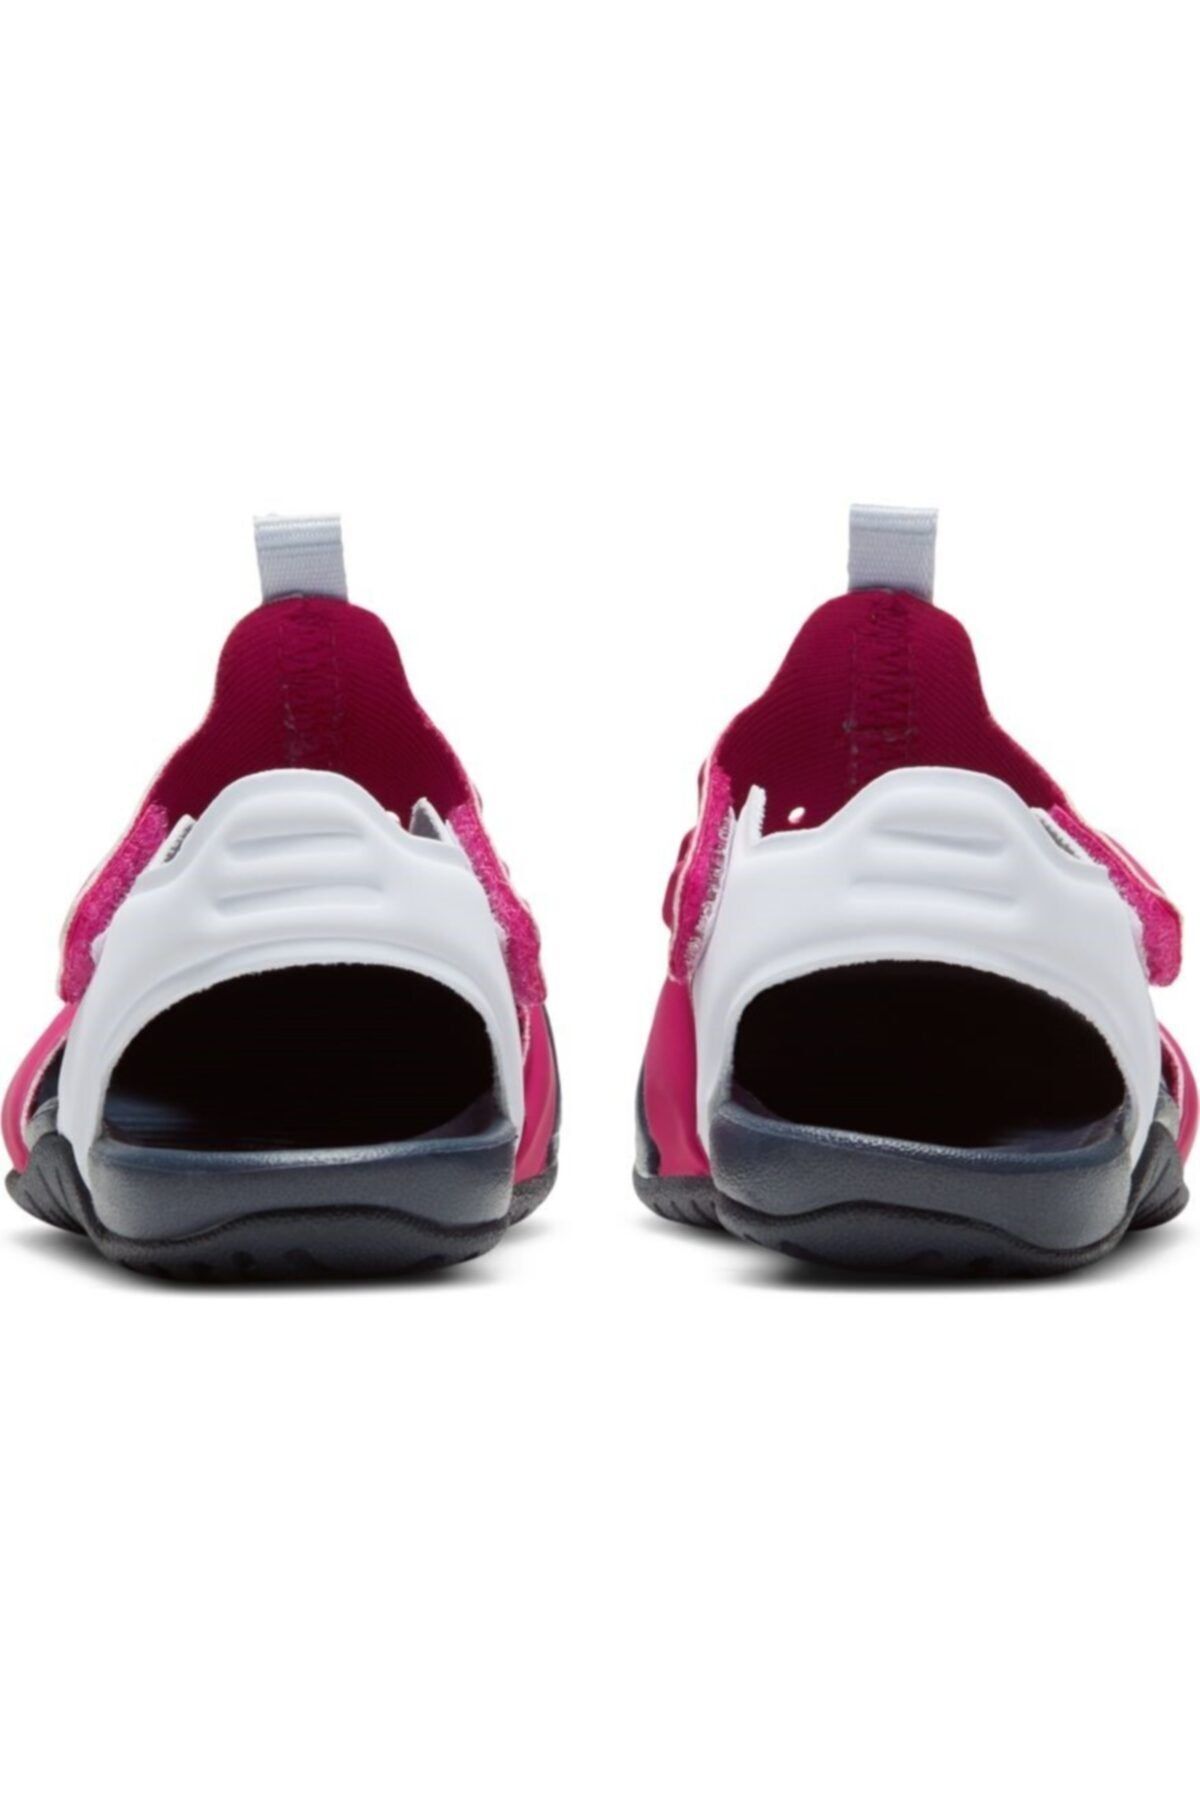 Nike Unisex Child Pink Sunray از 2 TD Sandals محافظت می کند